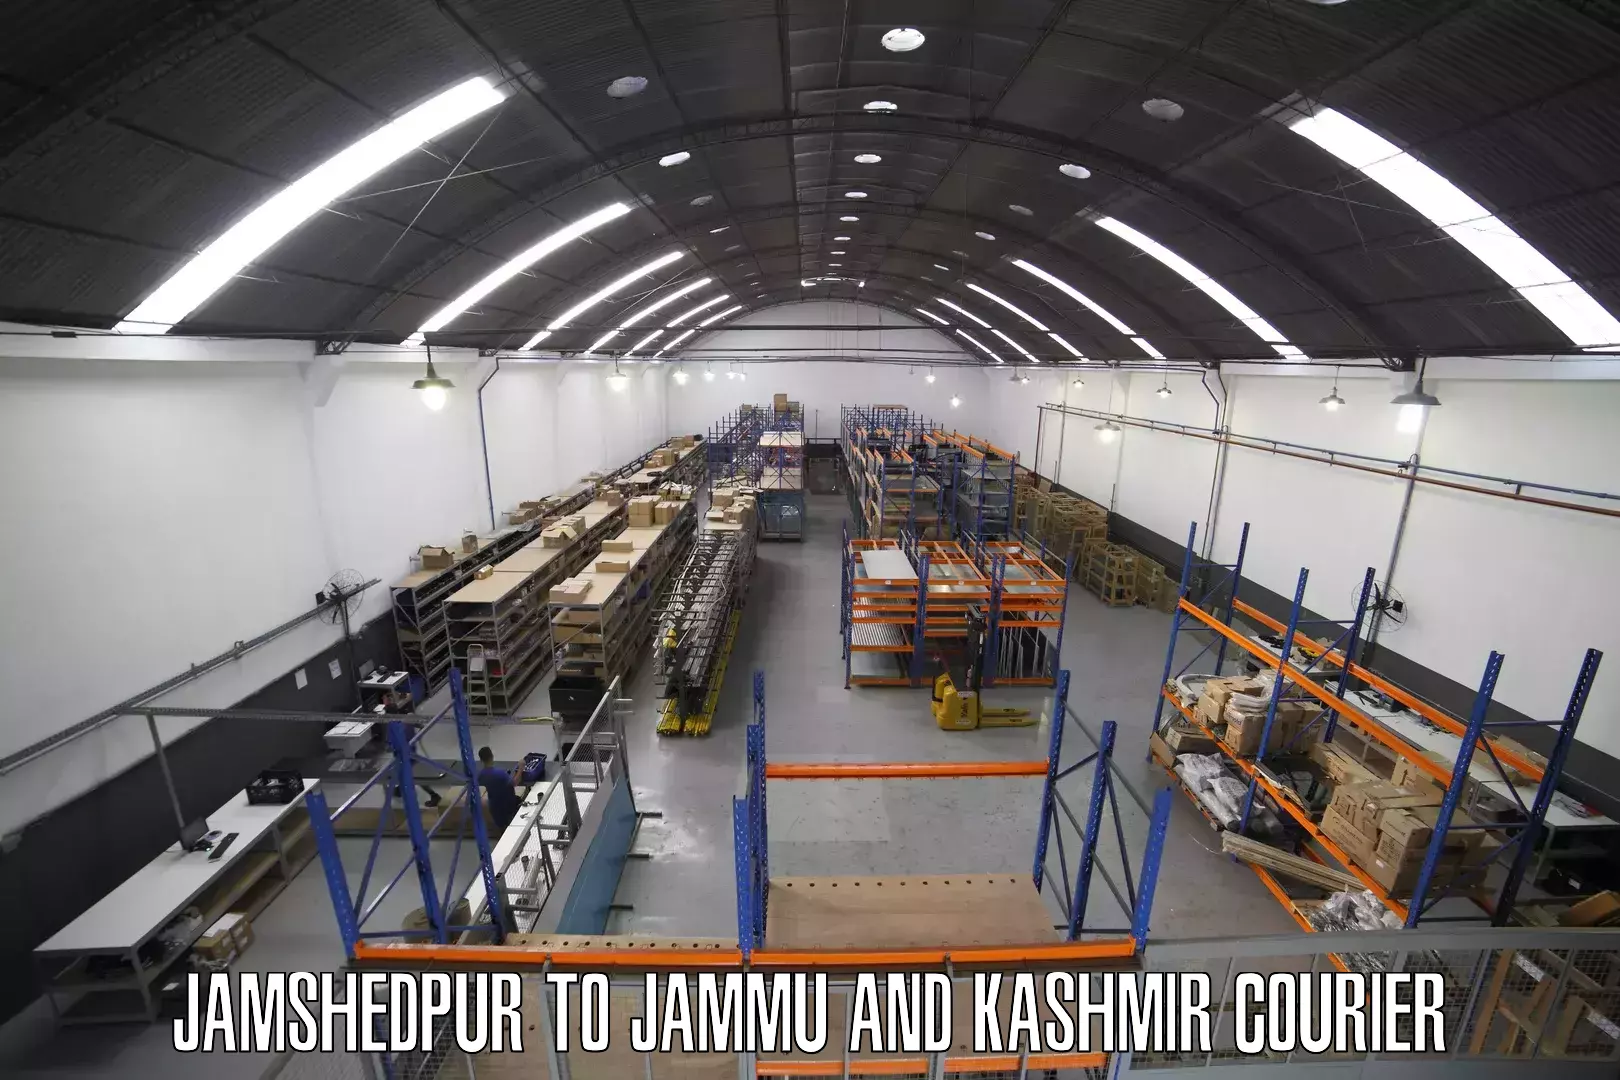 Express delivery network Jamshedpur to Kulgam